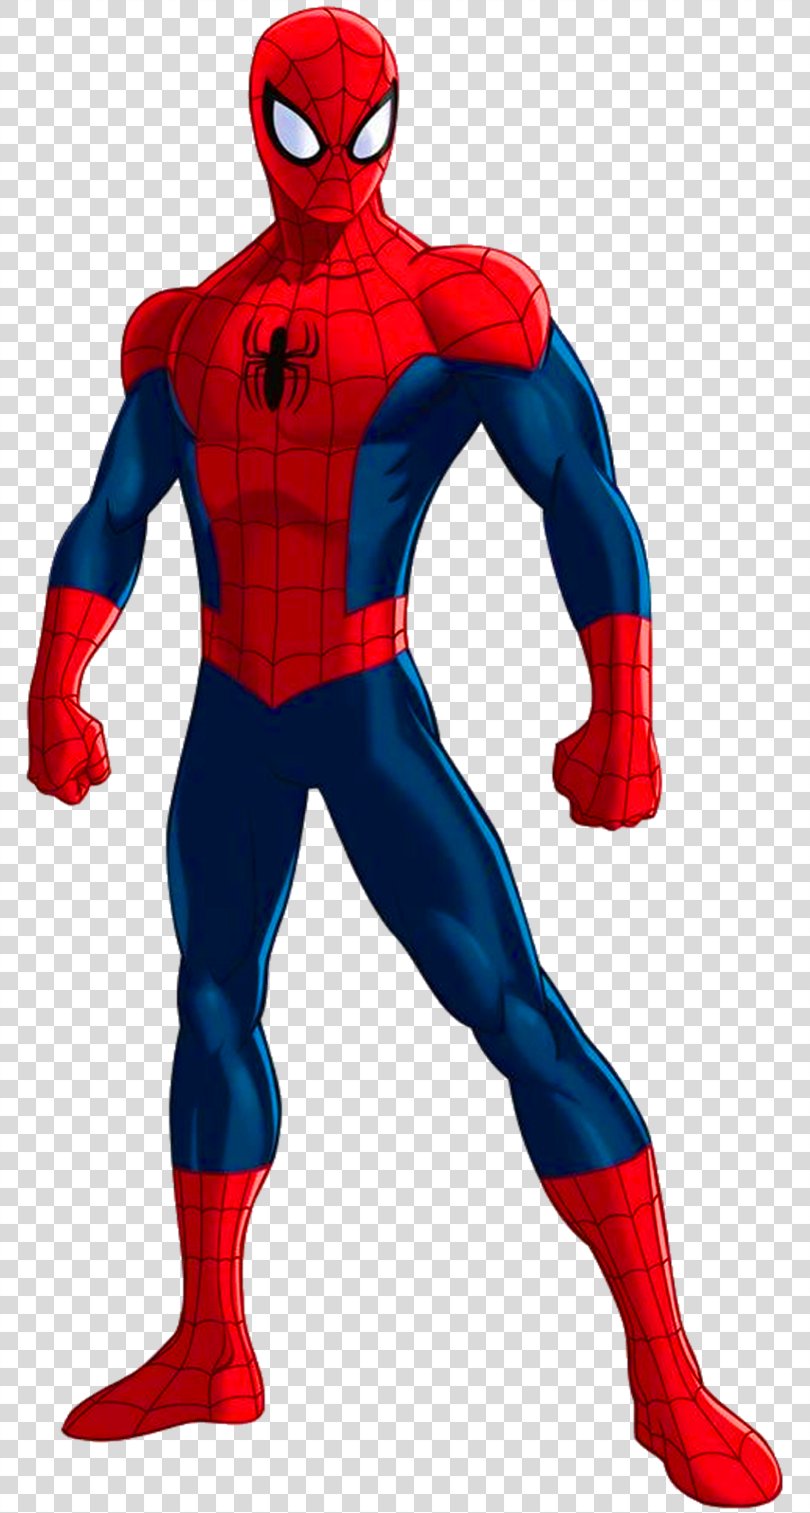 Spider-Man: Shattered Dimensions Ultimate Spider-Man Marvel Comics Superhero, Spider-Man Pic PNG